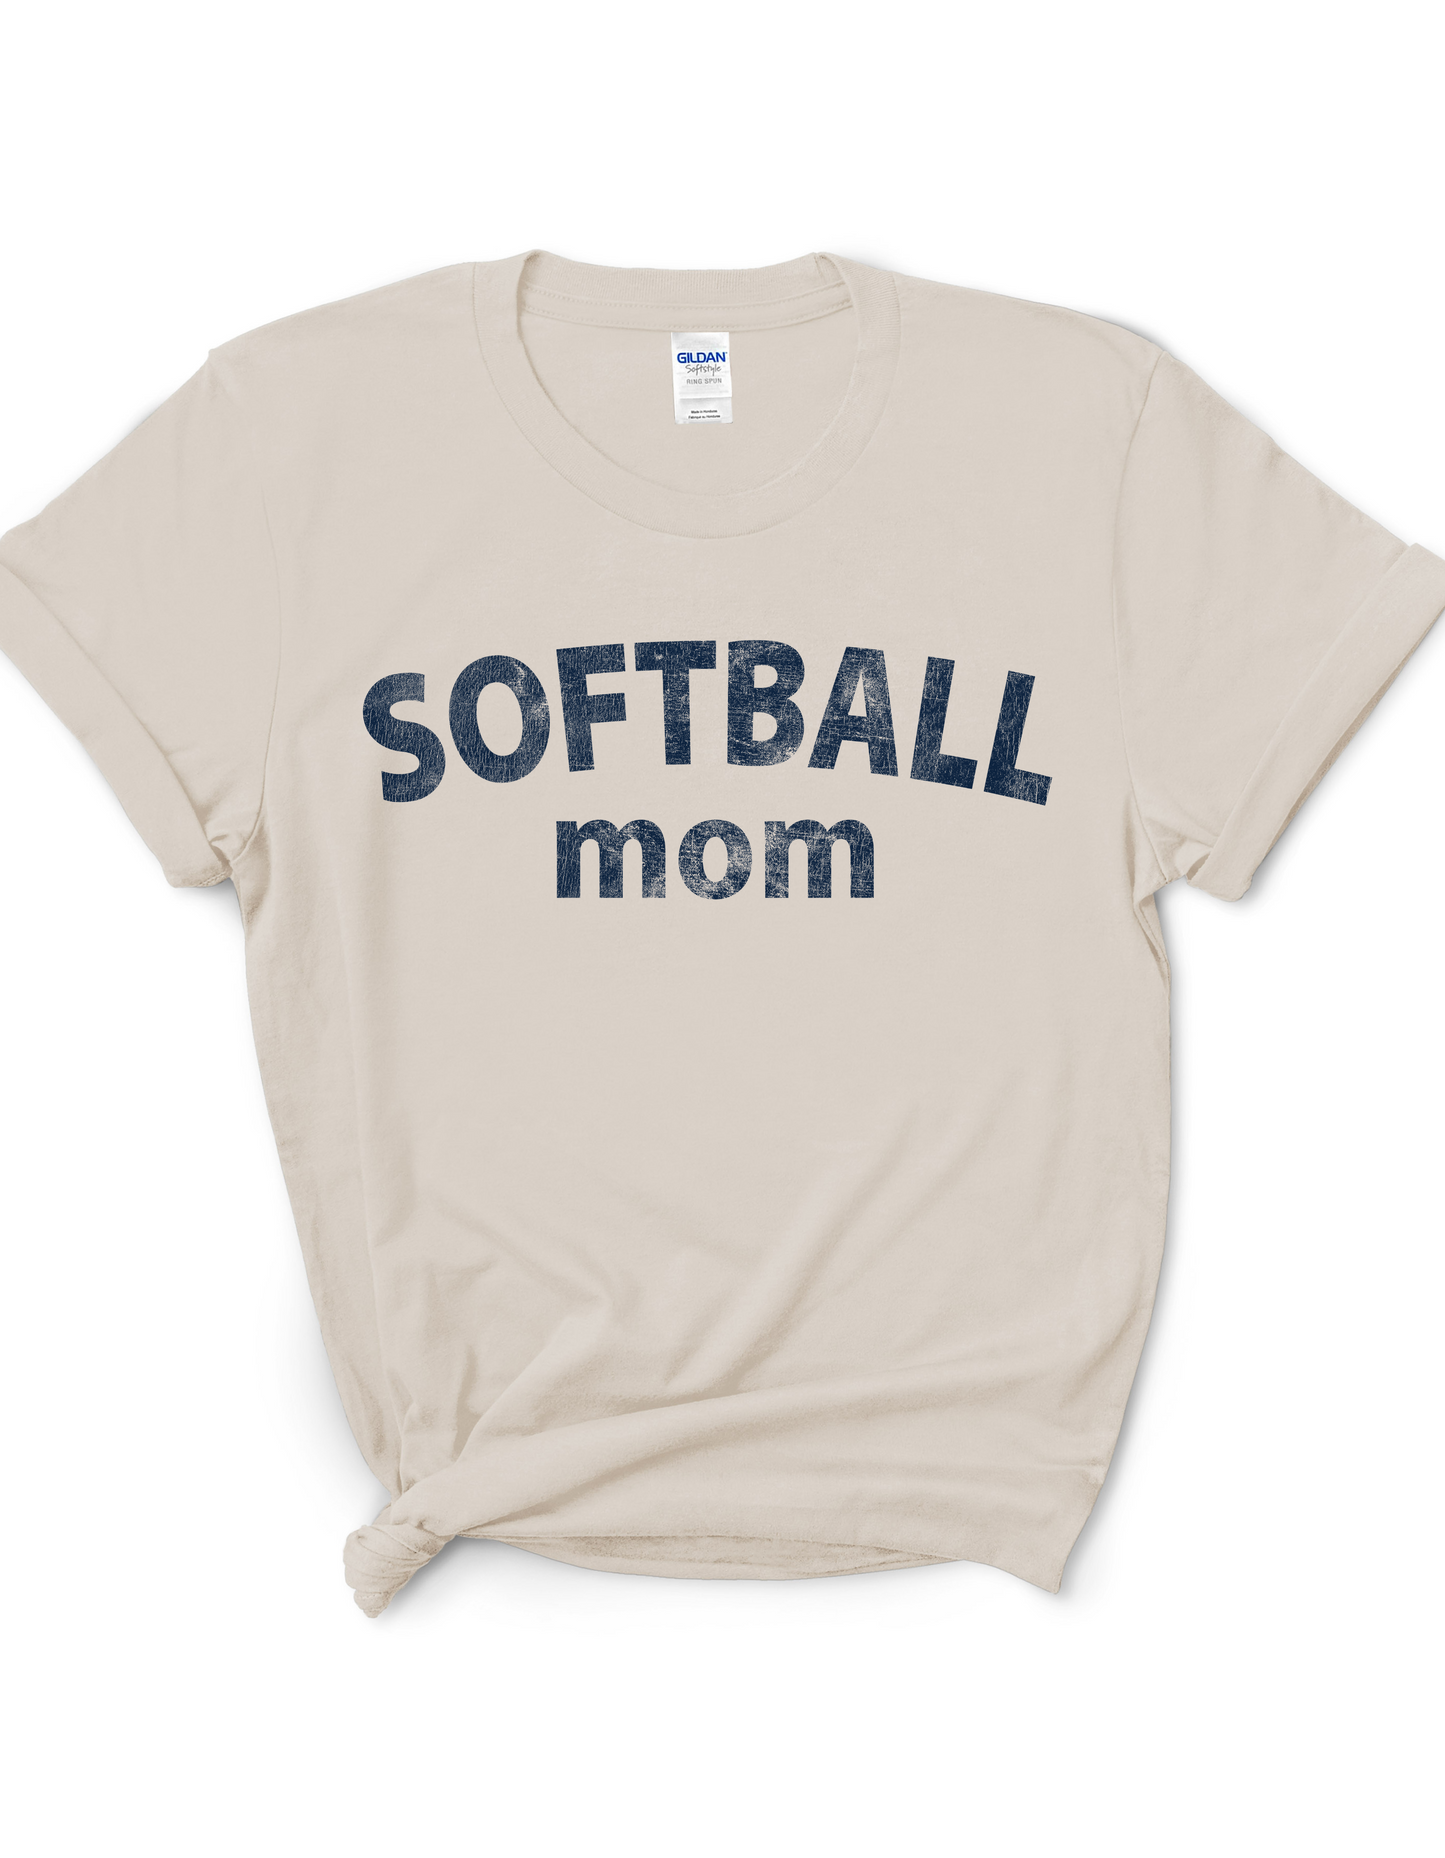 Mom Era - Softball